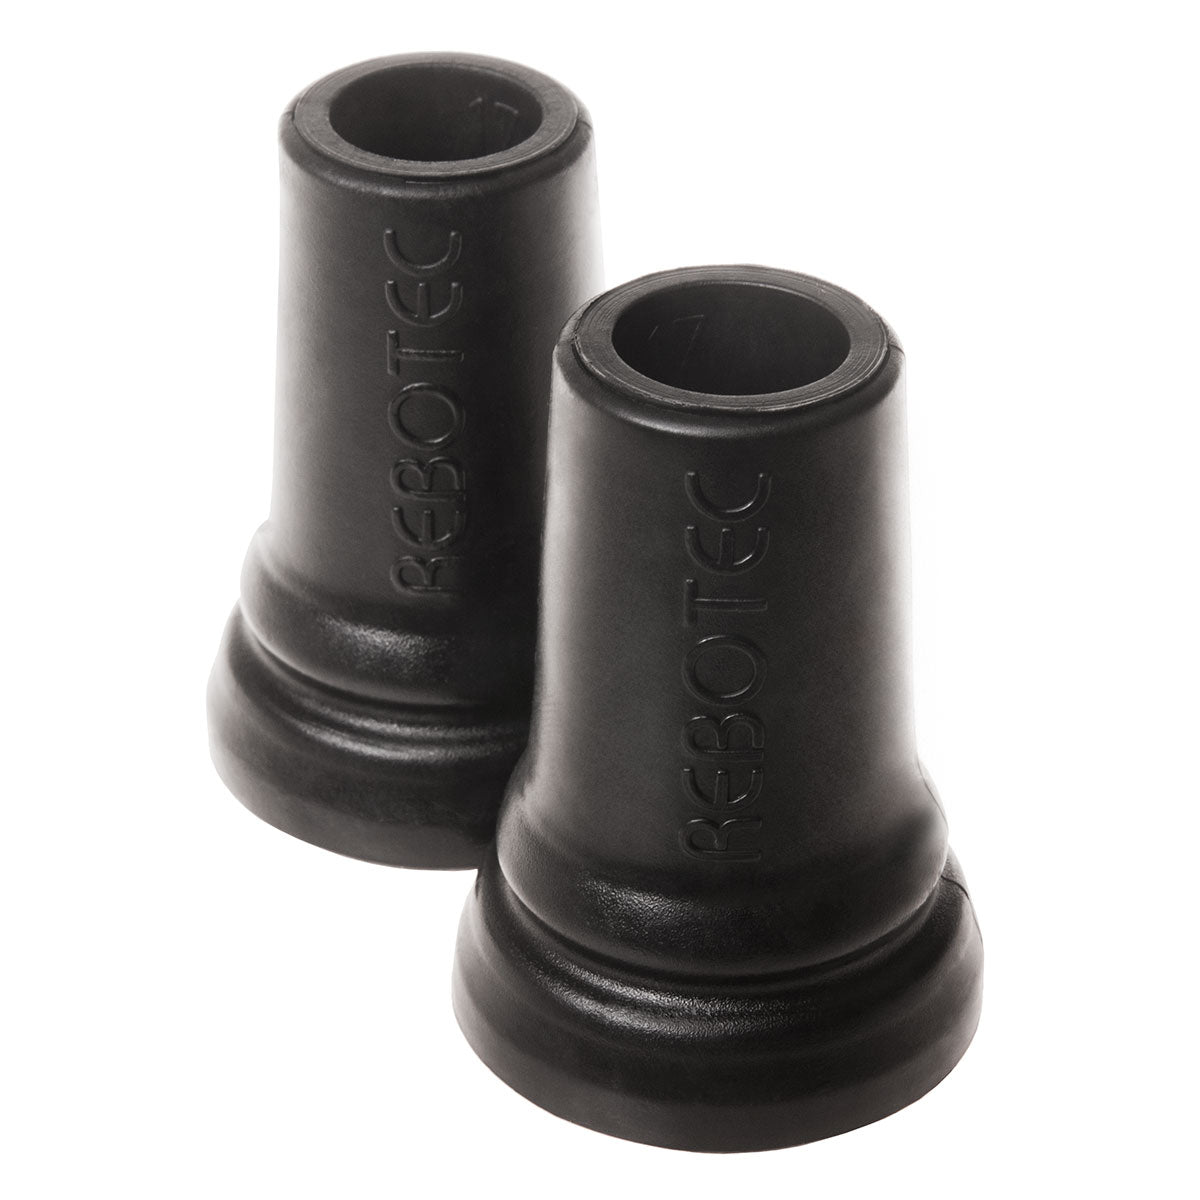 Rebotec 17mm Ferrules - Tips for Crutches - Black